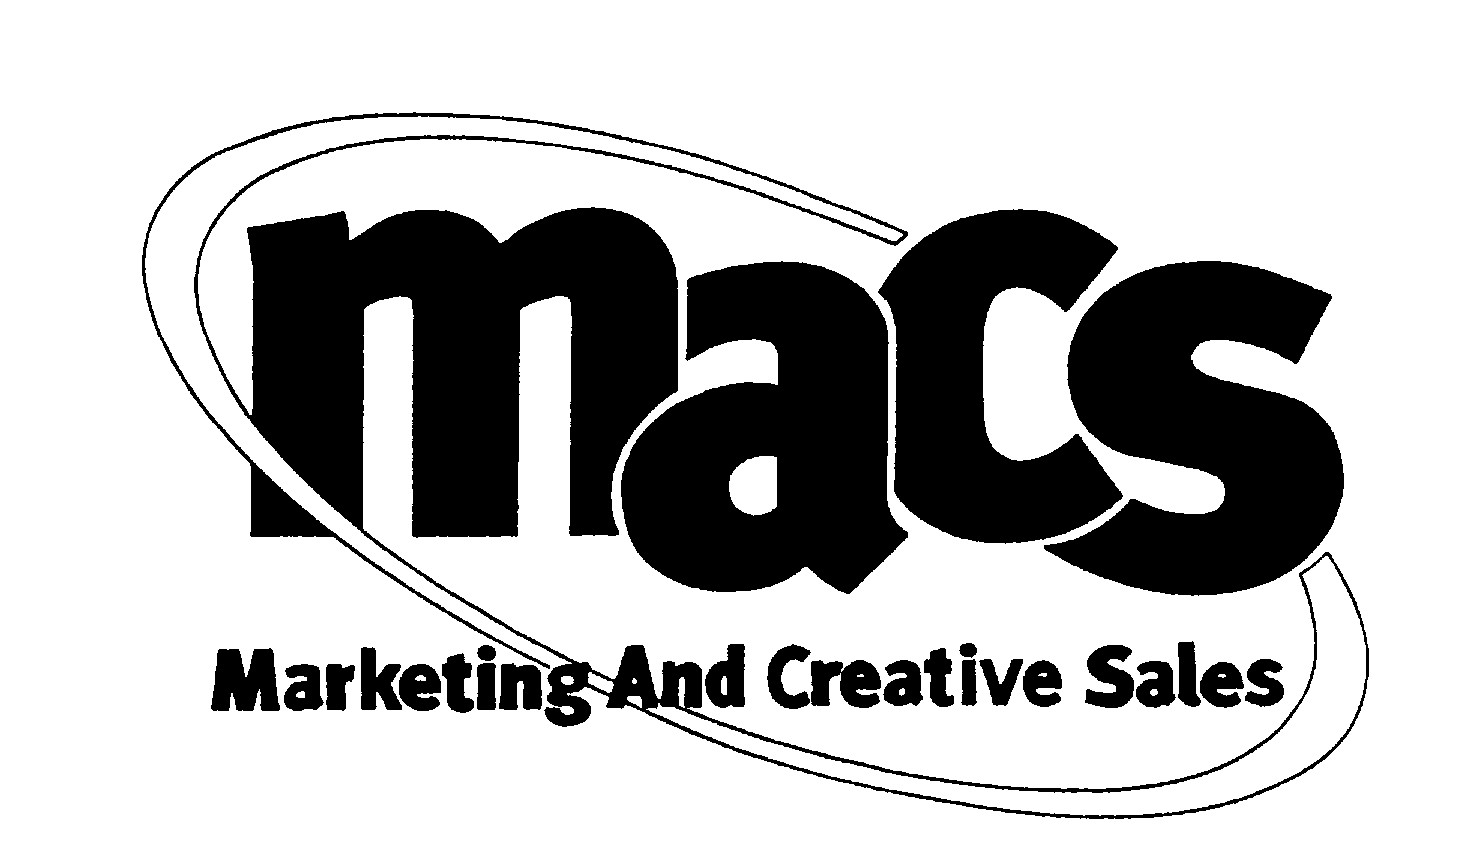  MACS MARKETING AND CREATIVE SALES